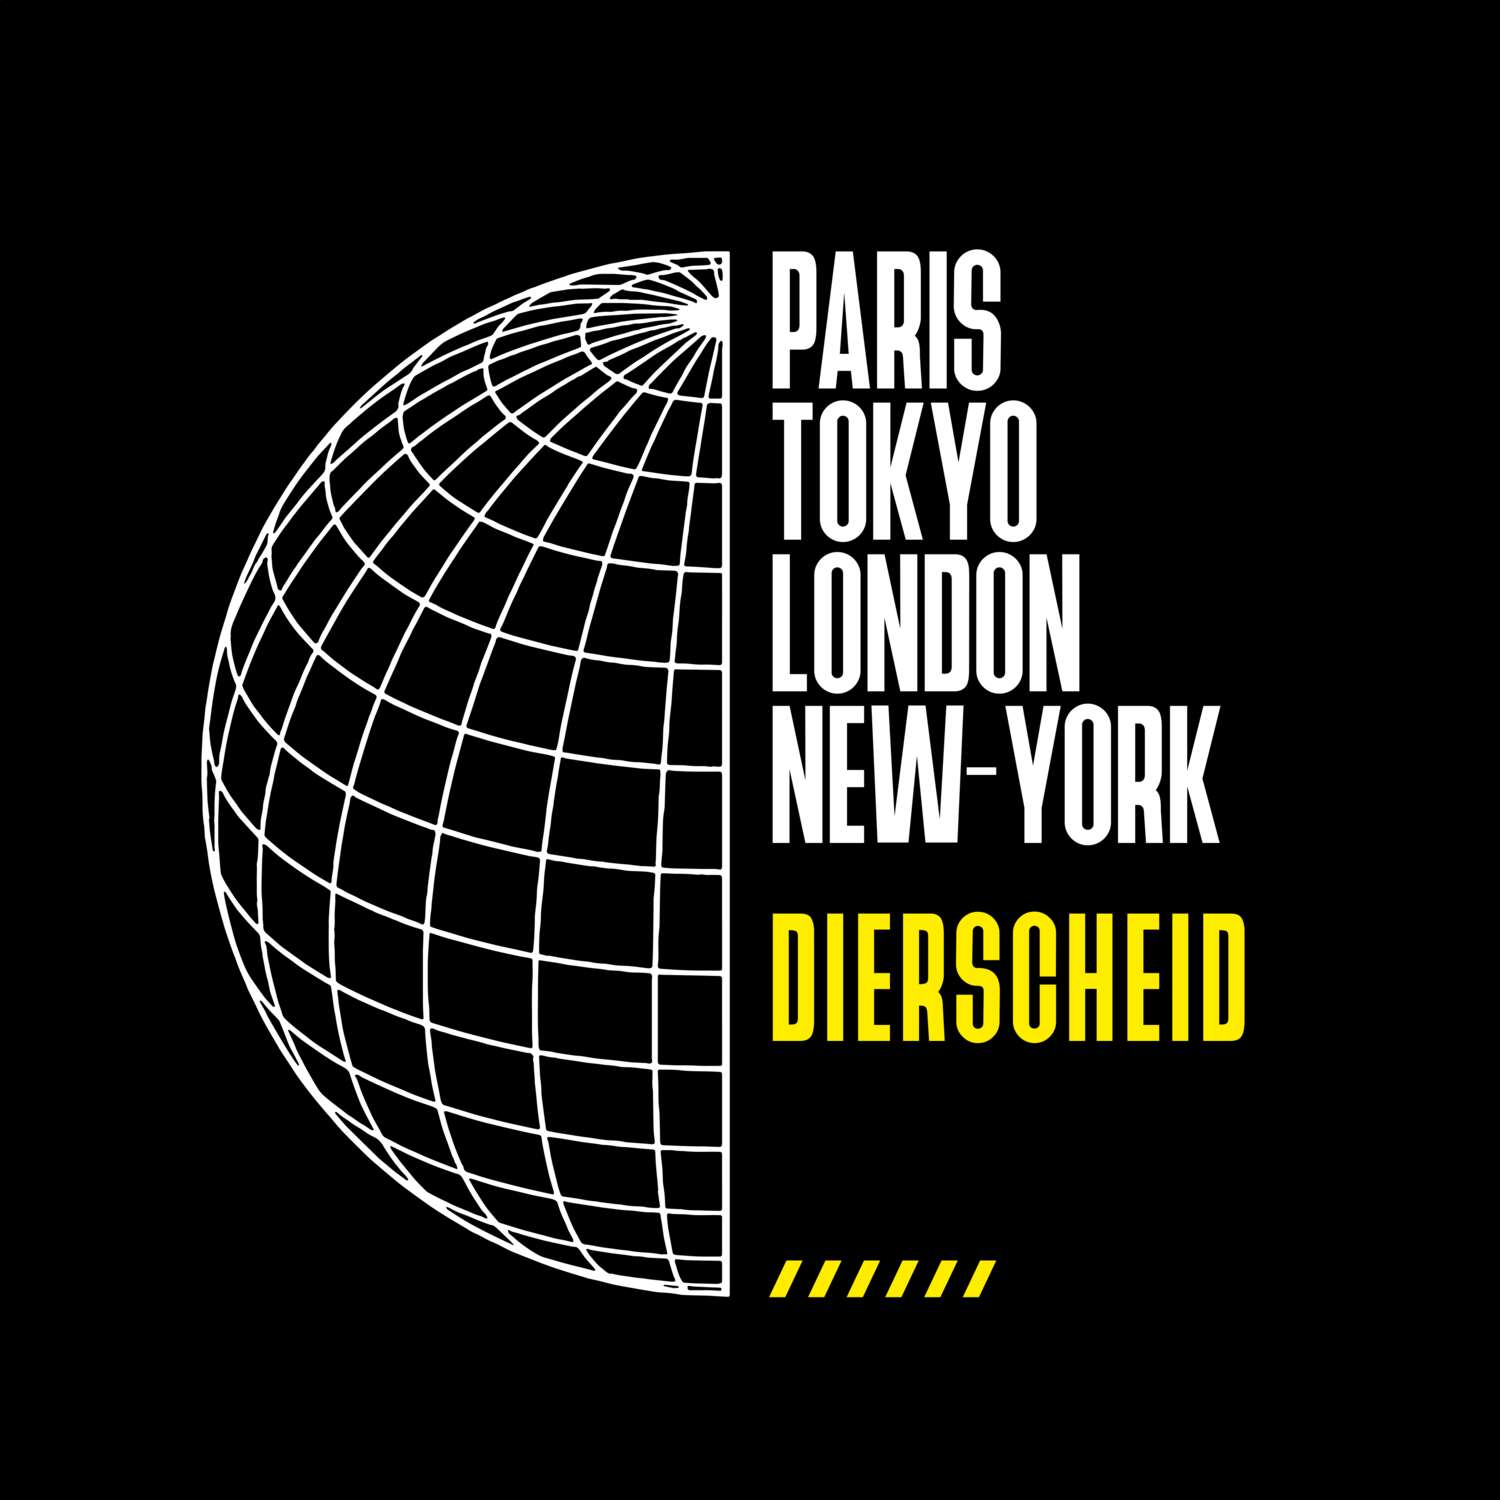 Dierscheid T-Shirt »Paris Tokyo London«